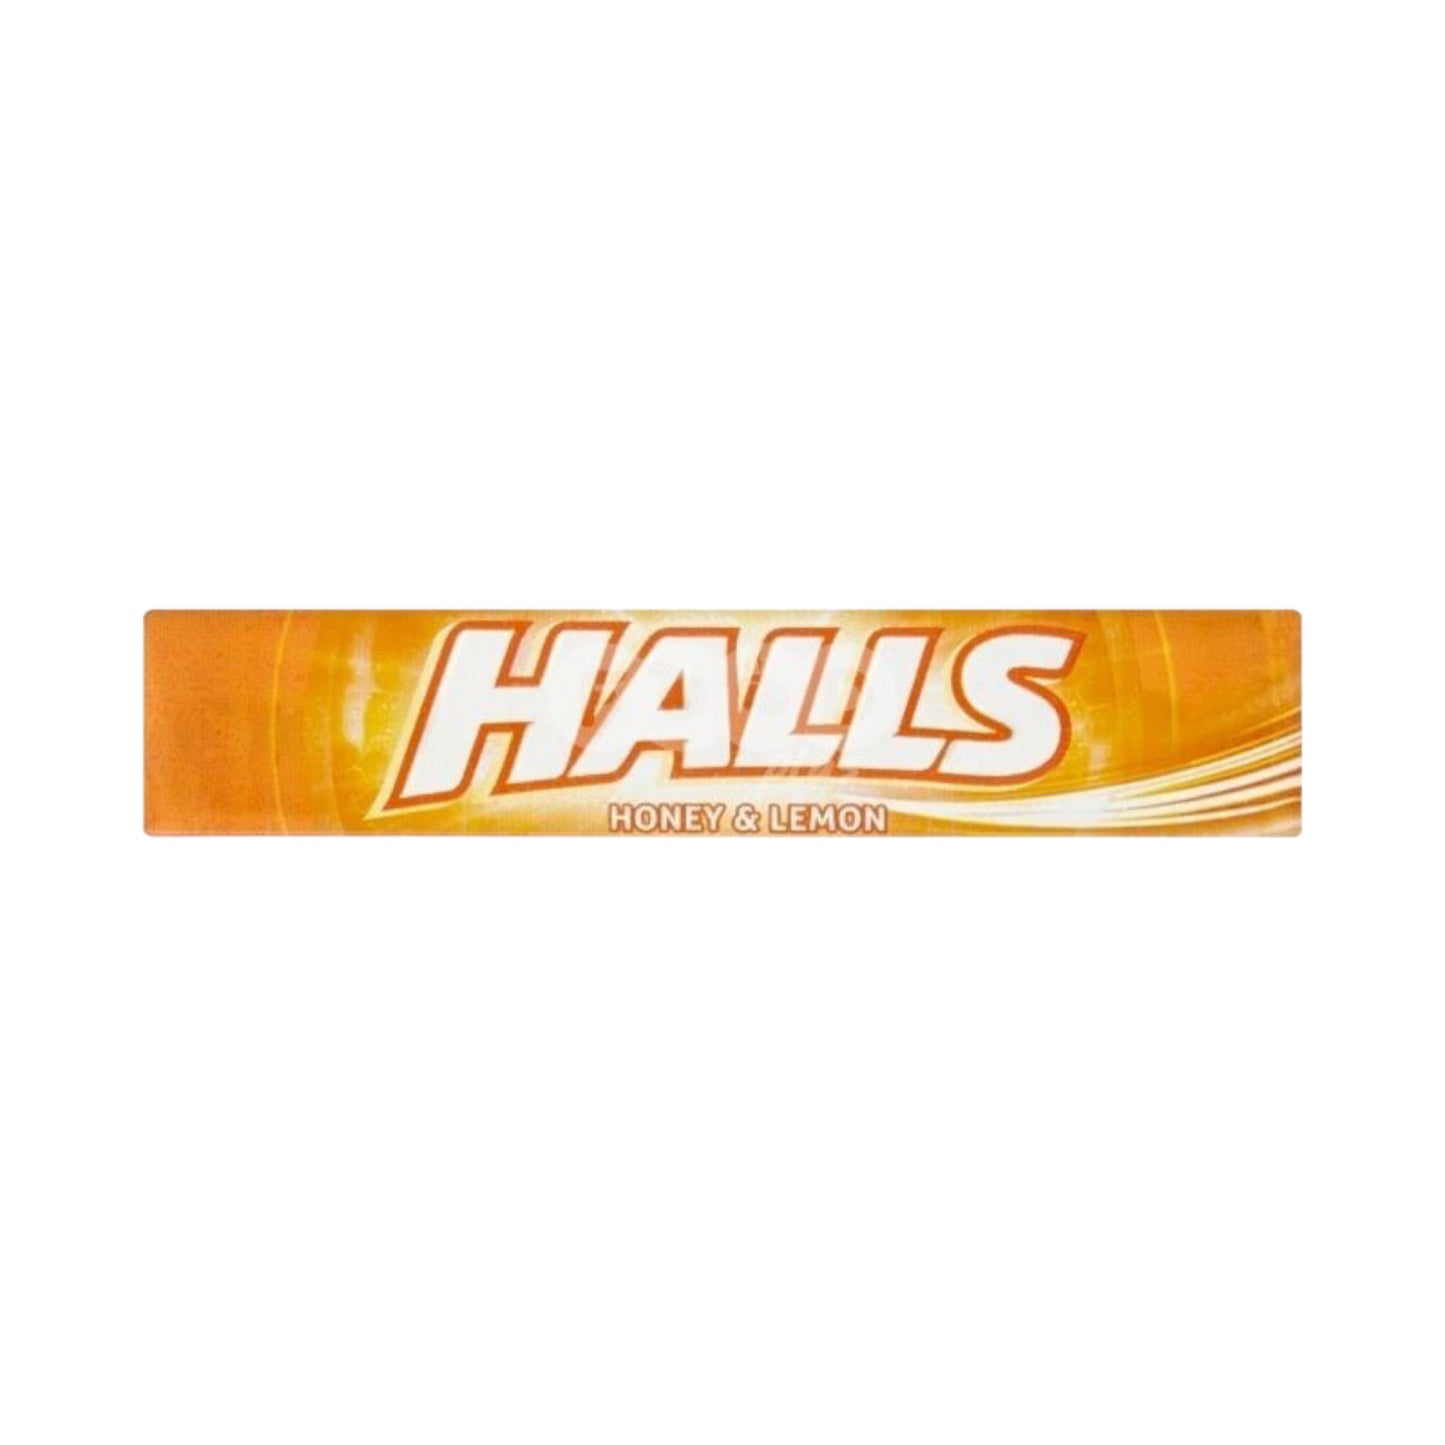 Halls Honey & Lemon - 33.5g